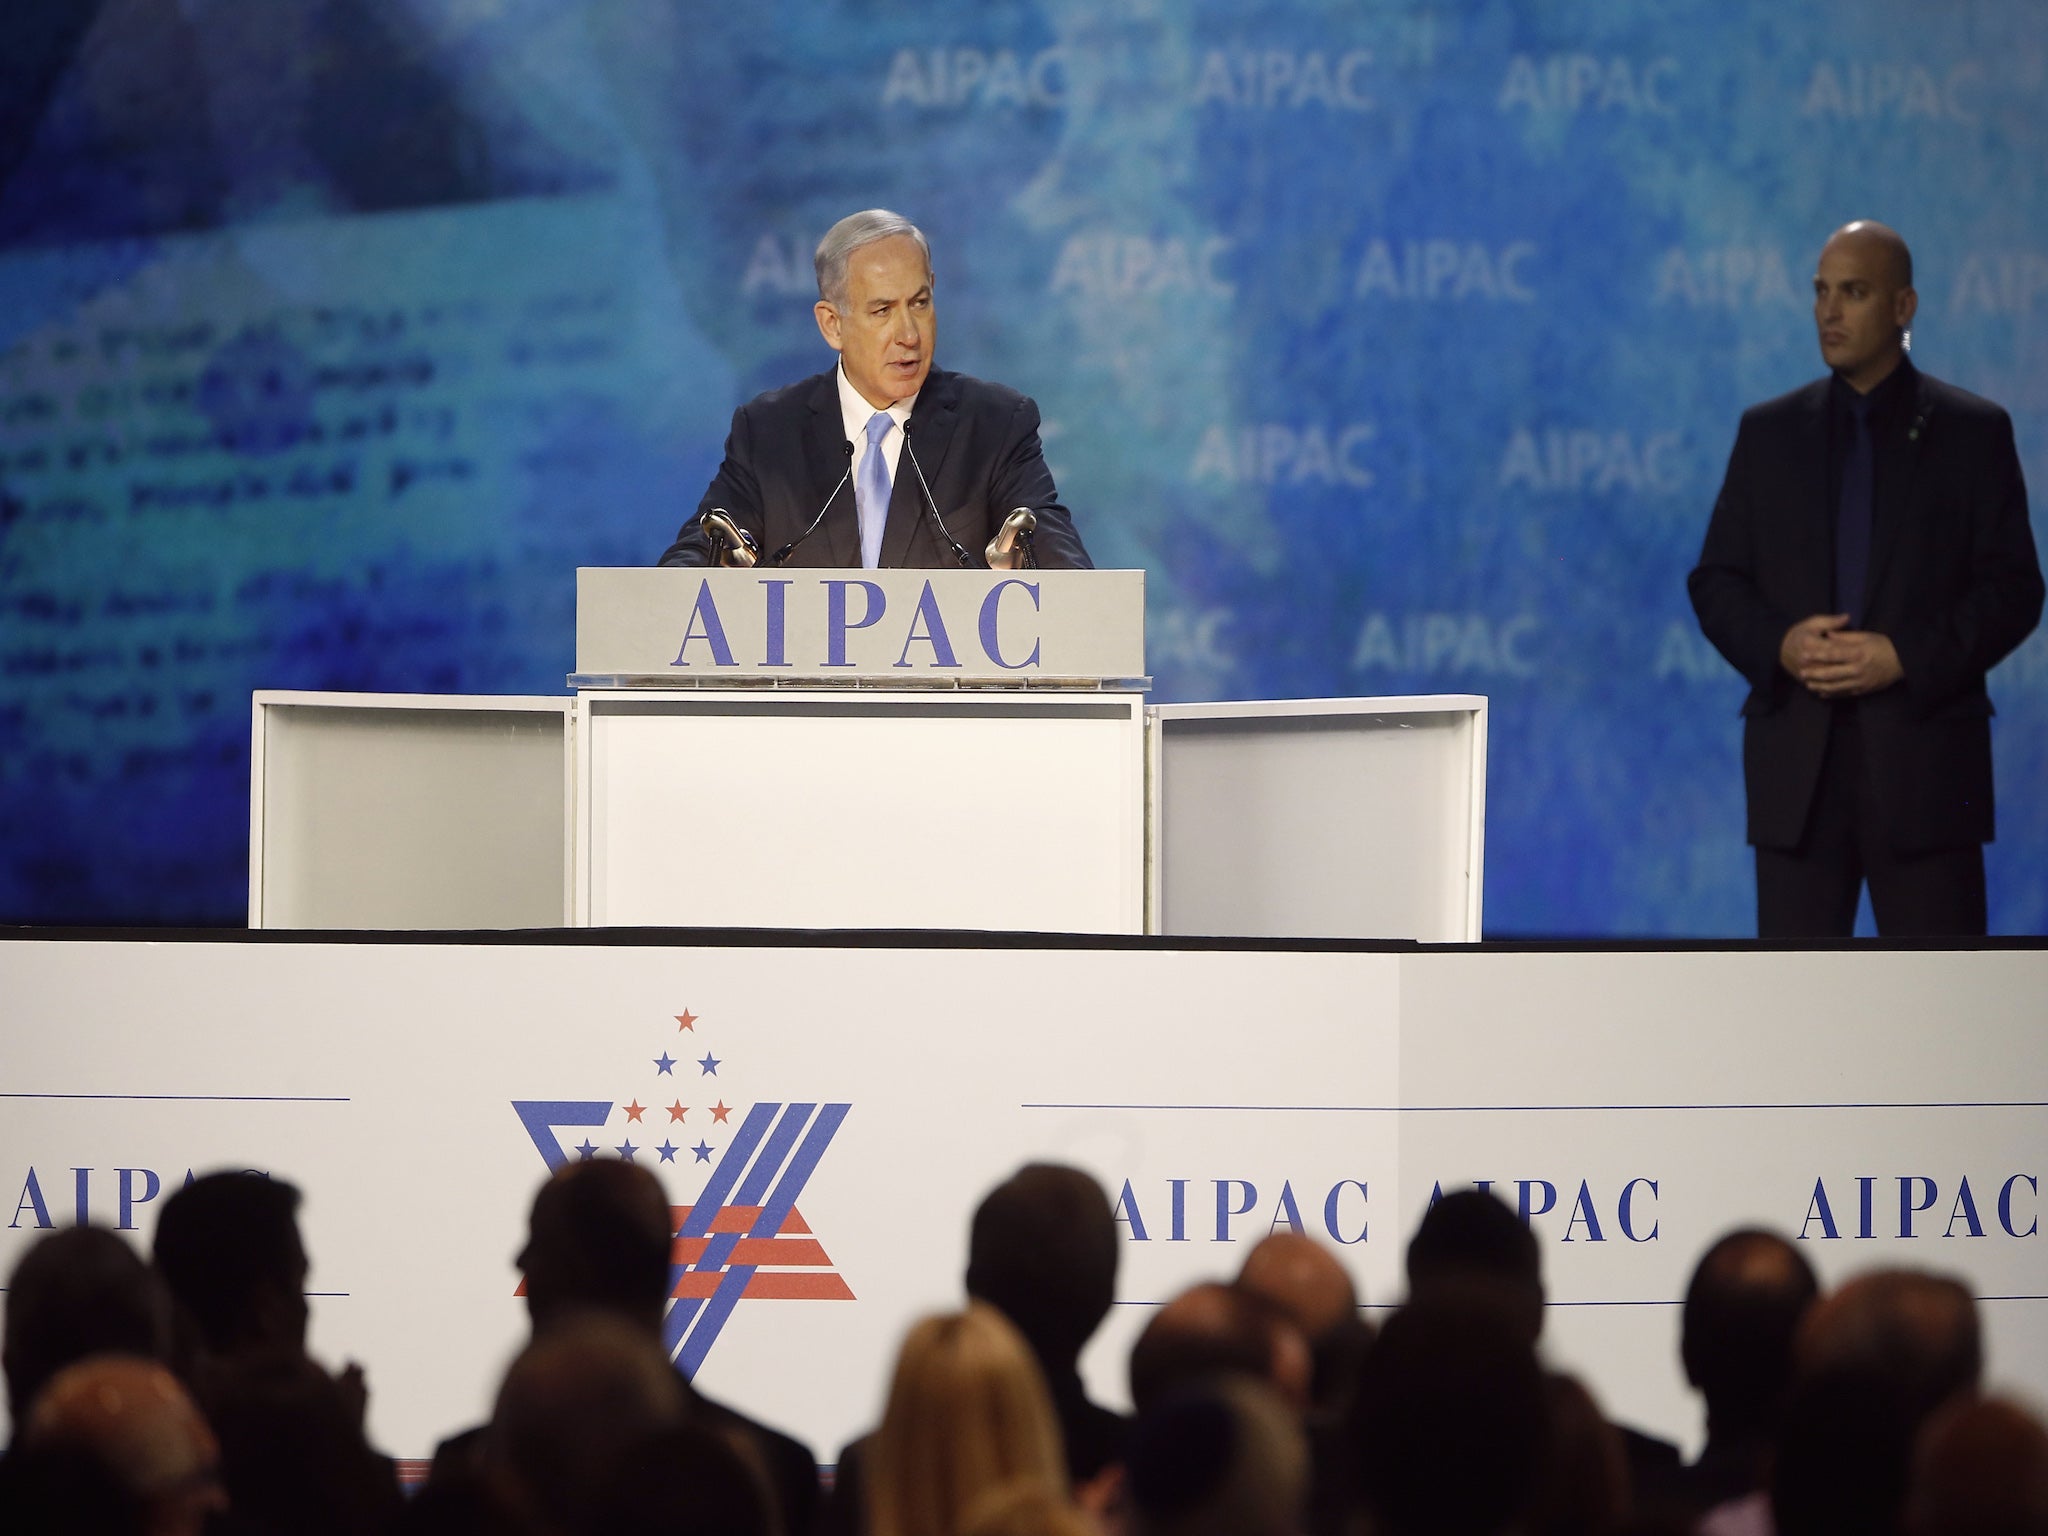 Mr Netanyahu will address Congress on Tuesday